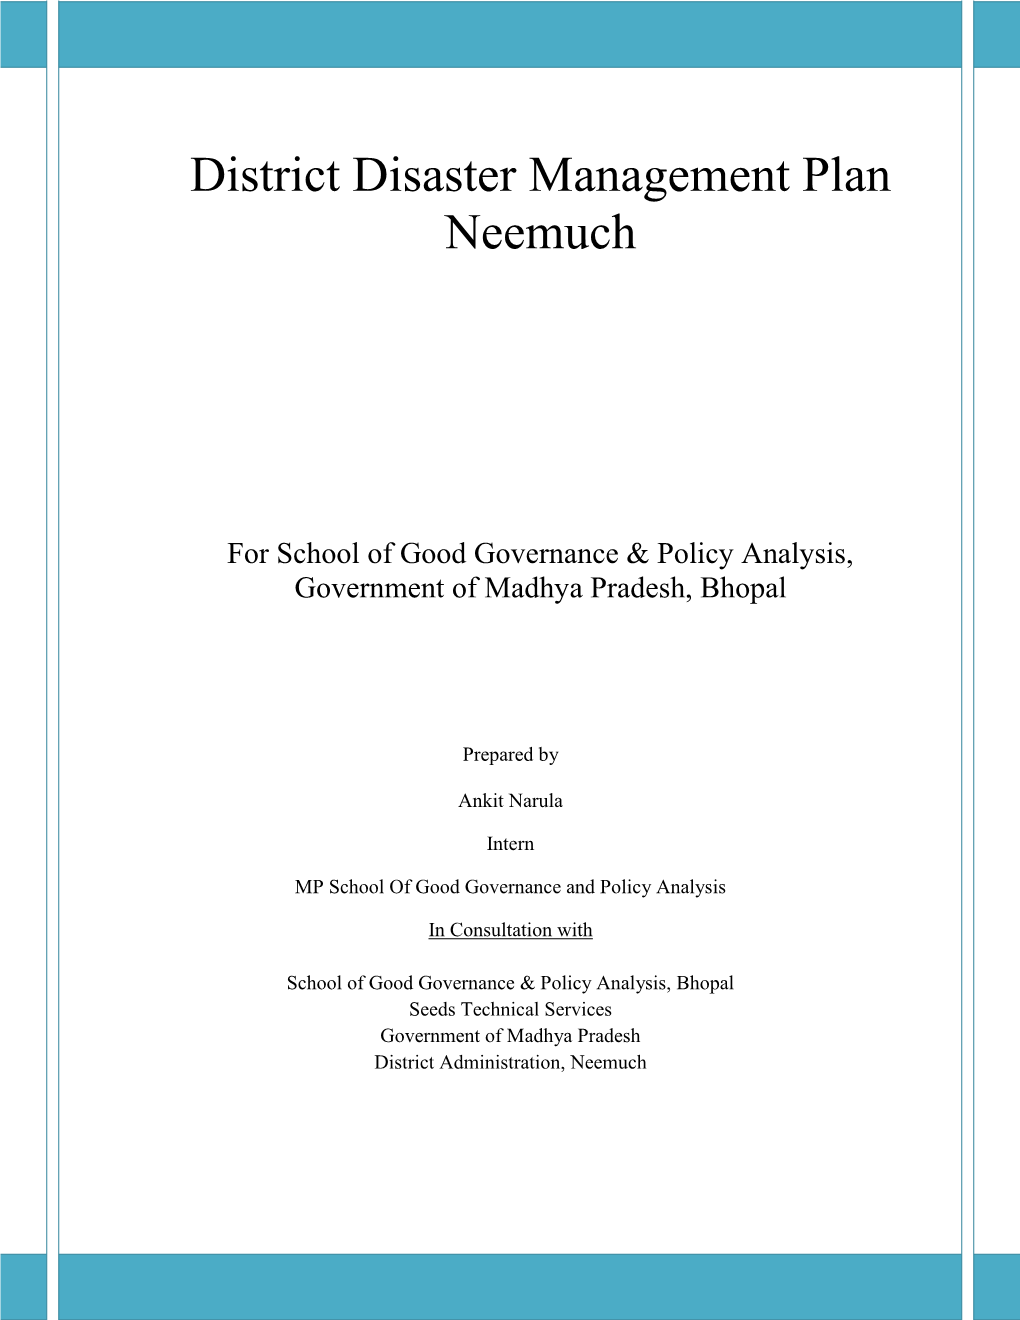 District Disaster Management Plan Neemuch